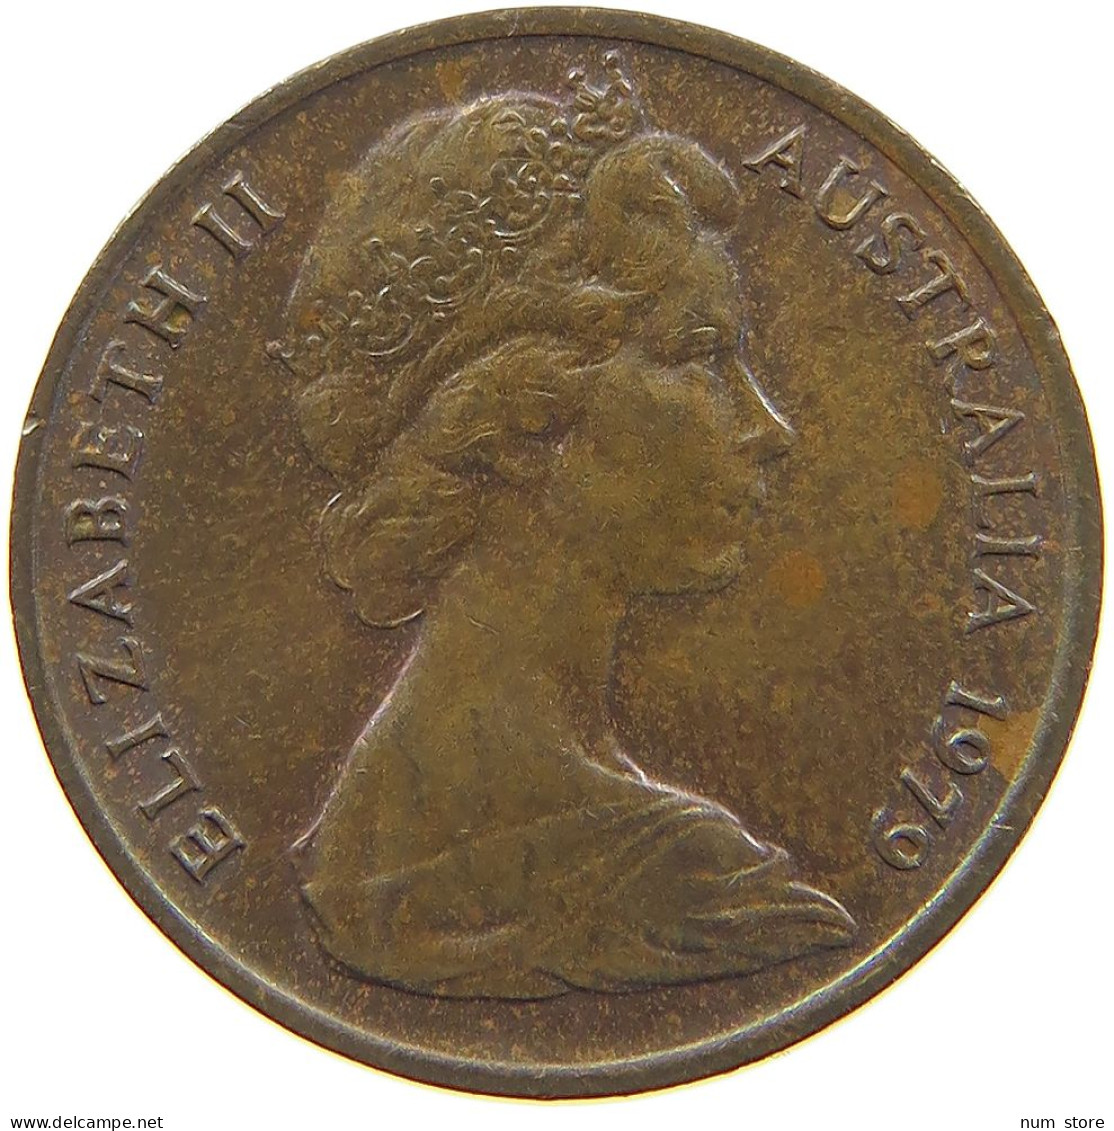 AUSTRALIA CENT 1979 ELIZABETH II. (1952-2022) #MA 066520 - Cent